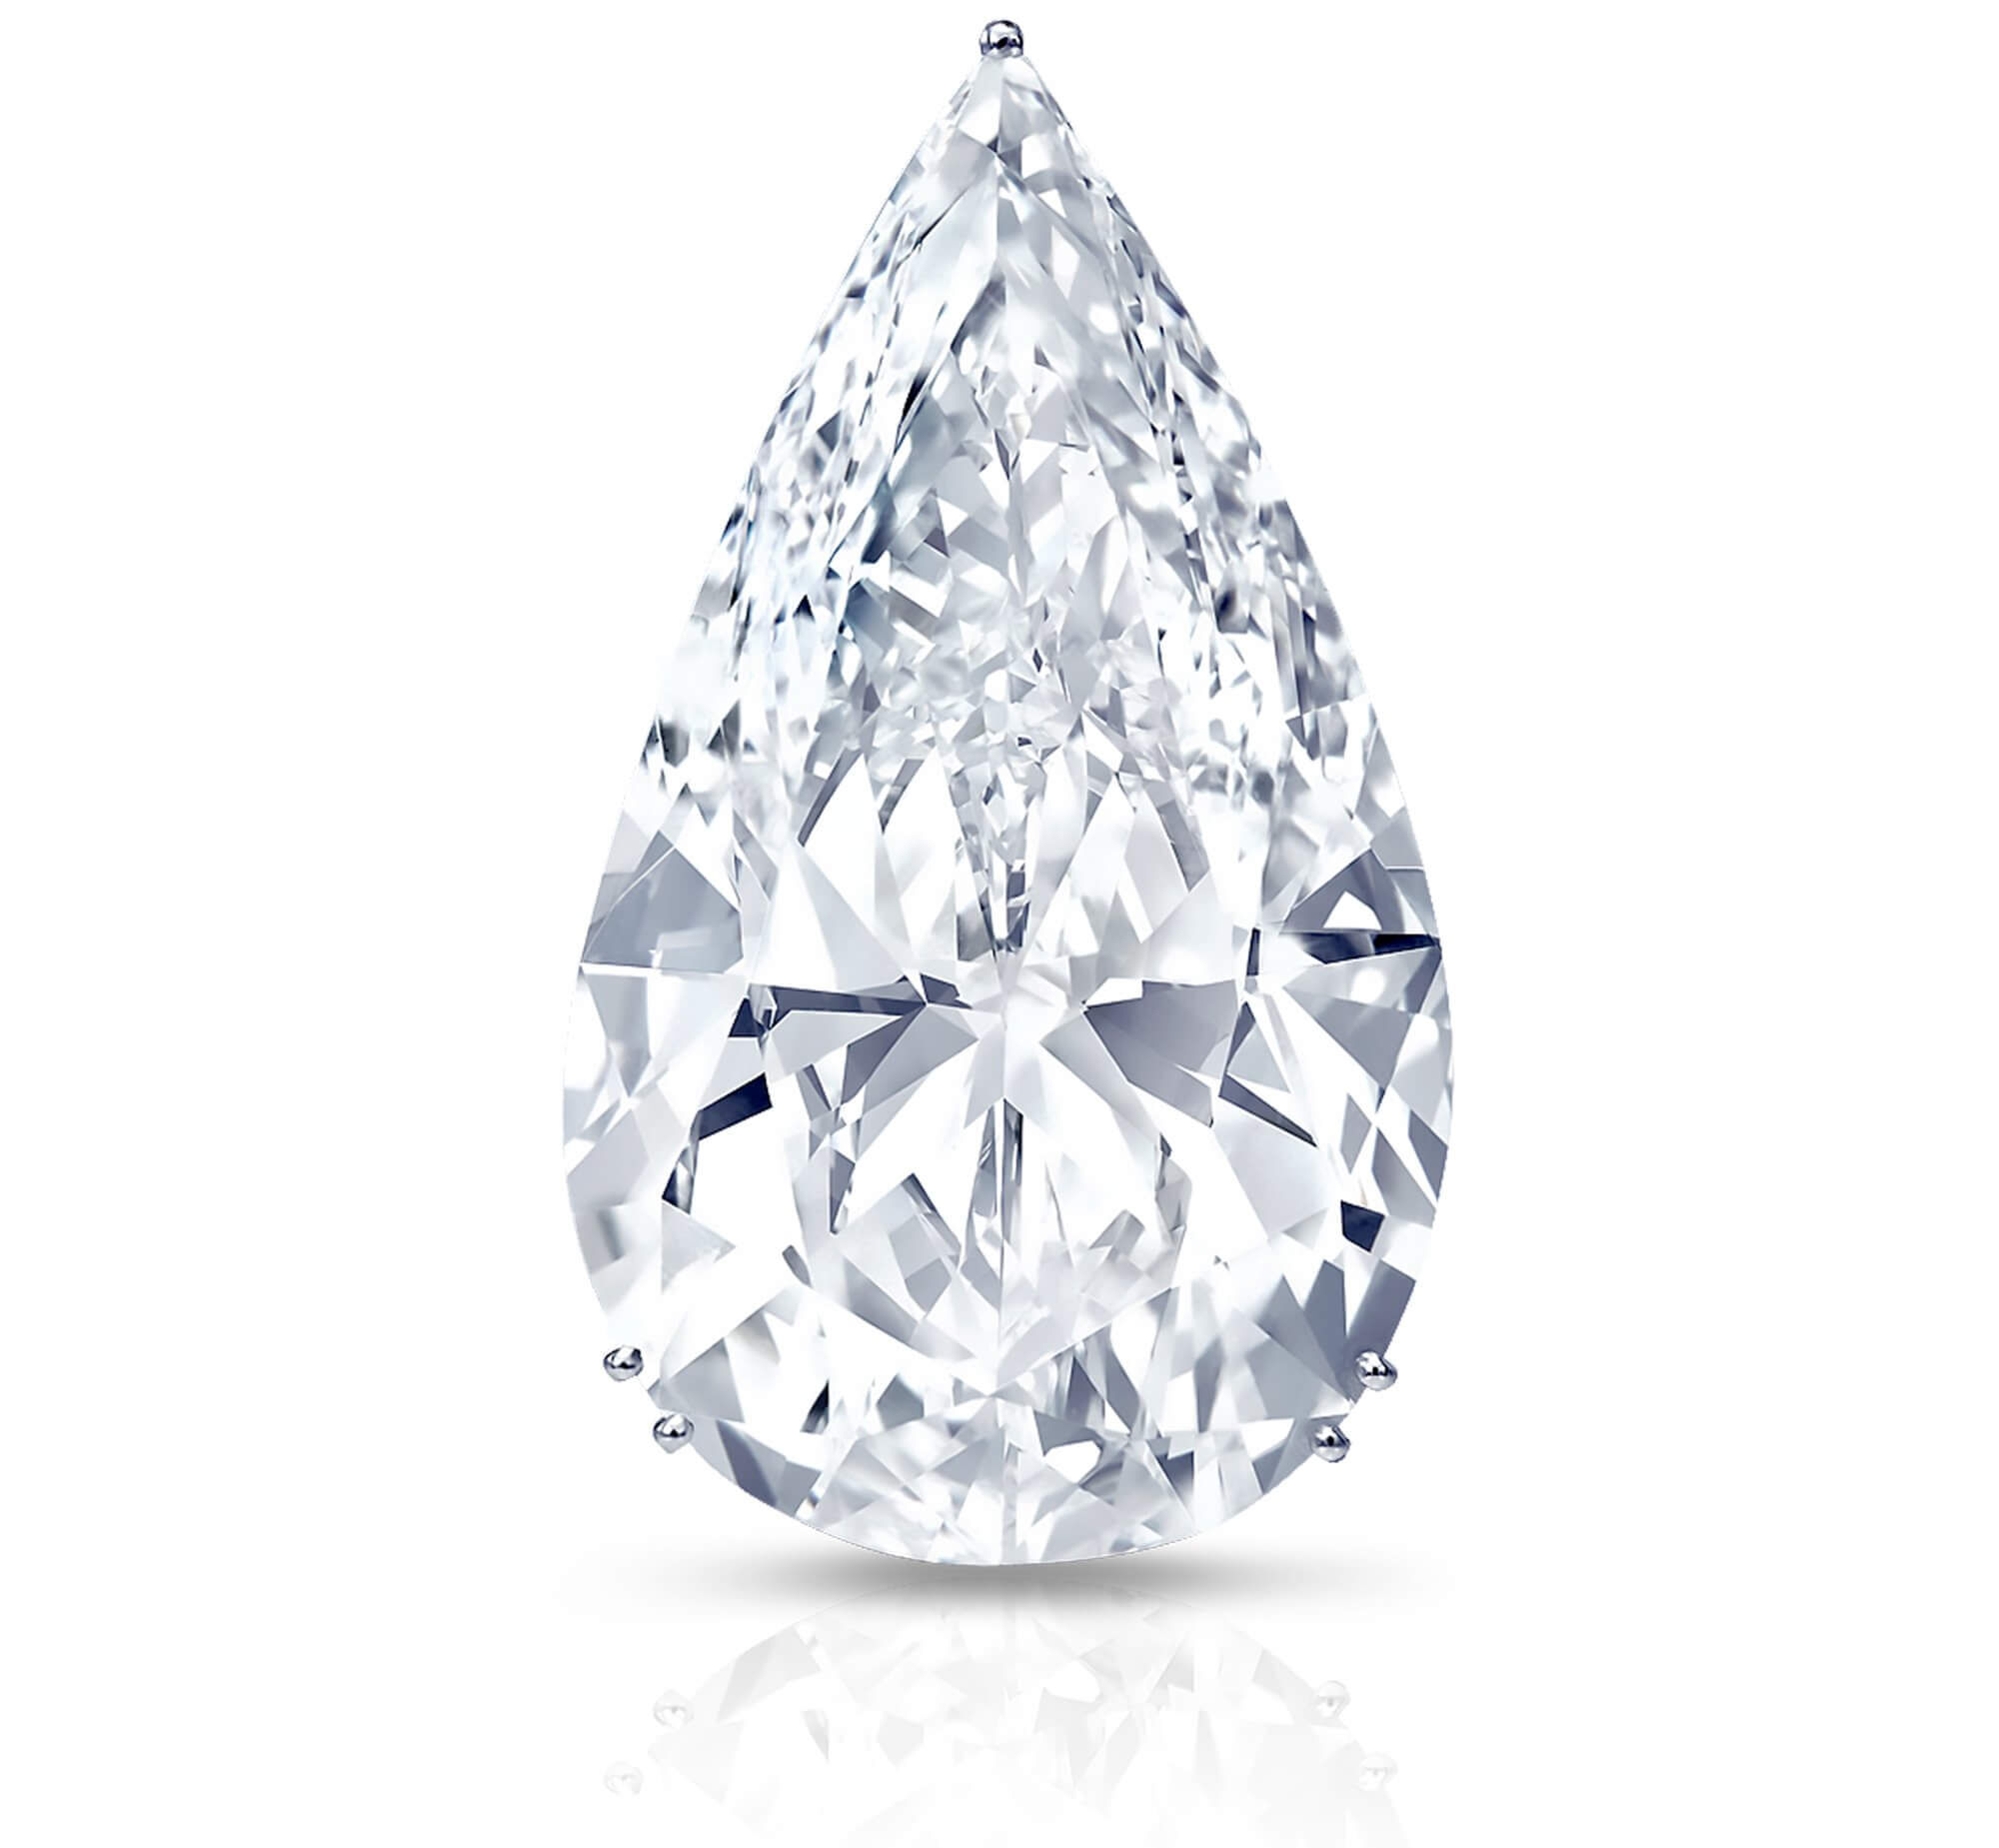 The 100 carat D flawless pear shape 'Graff Perfection' diamond 